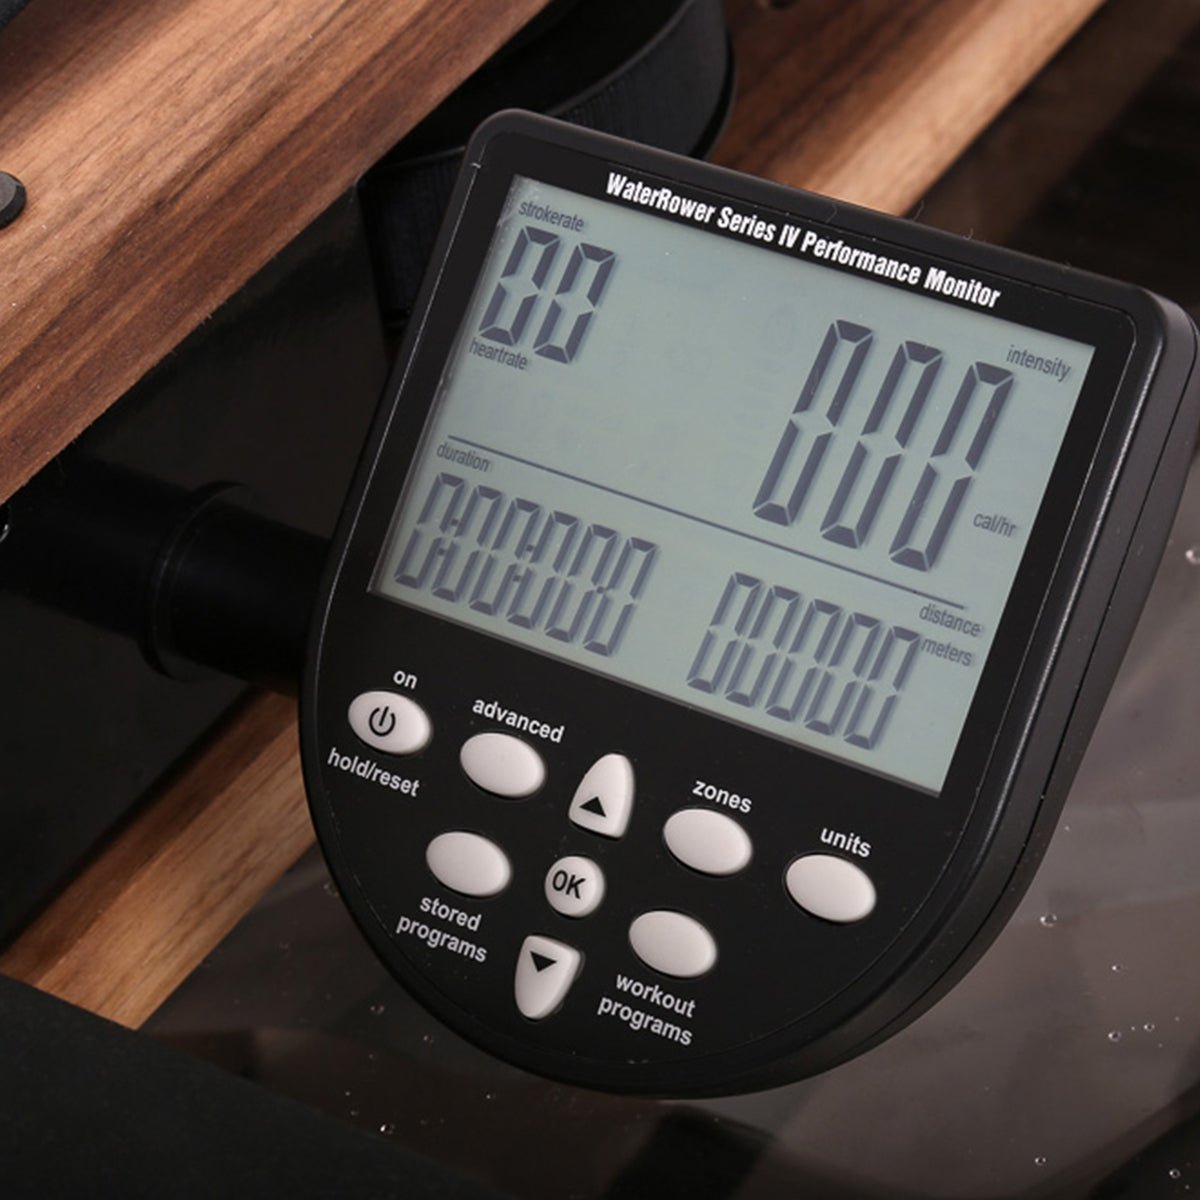 WaterRower Walnut Rowing Machine performance monitor | Fitness Experience